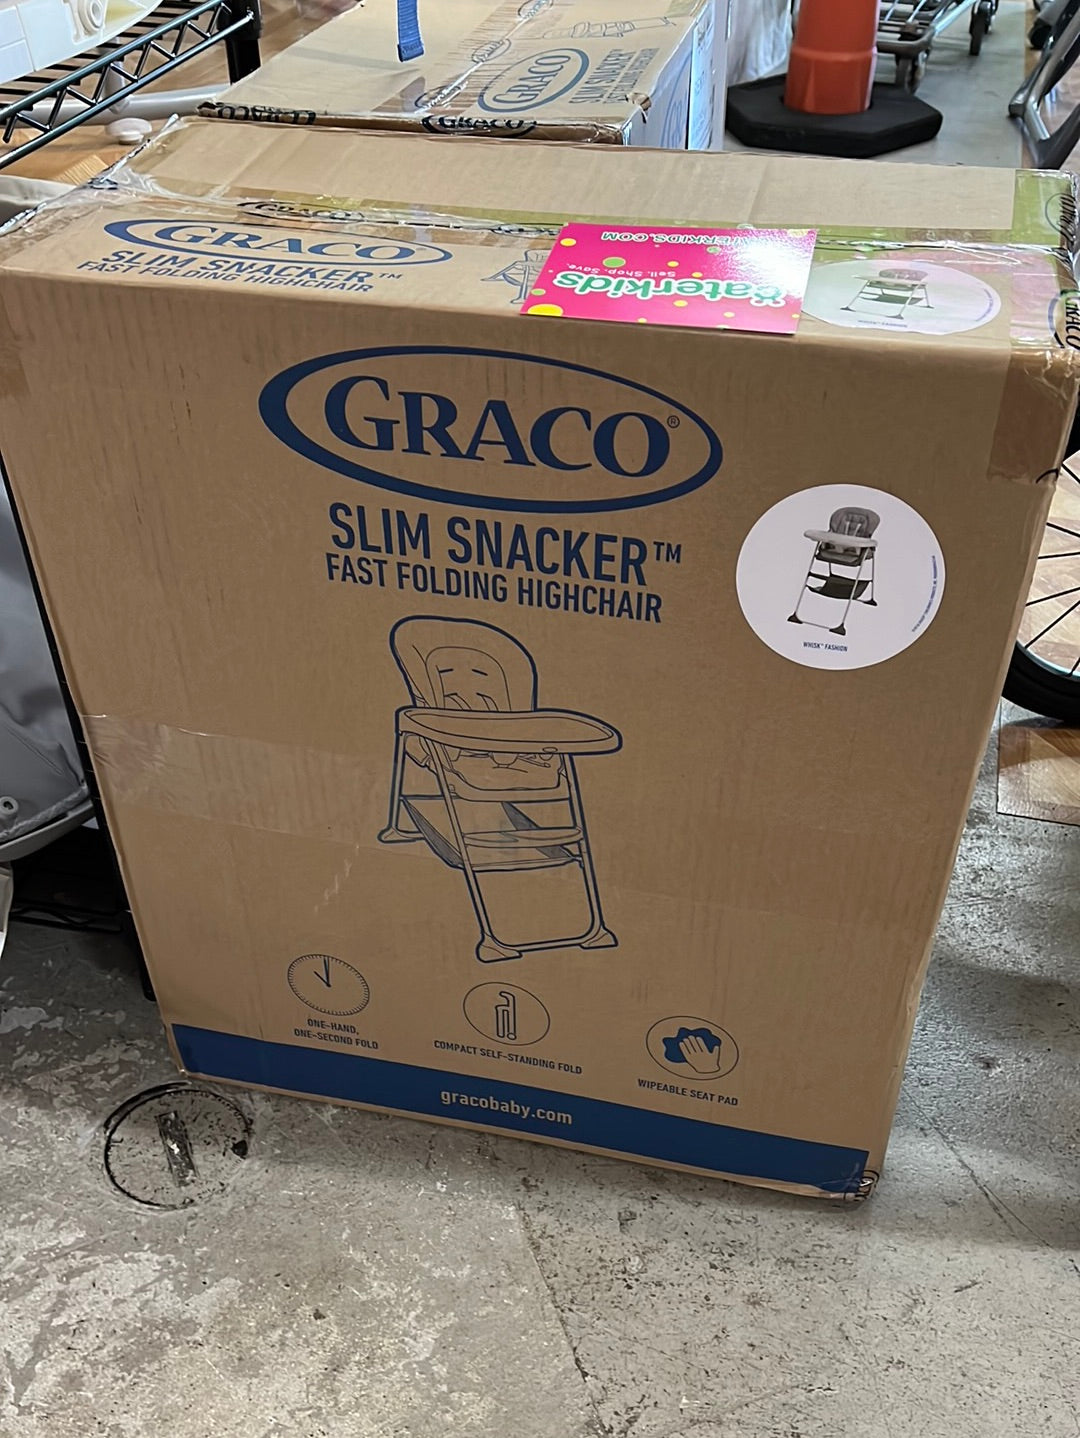 New Graco Slim Snacker High Chair